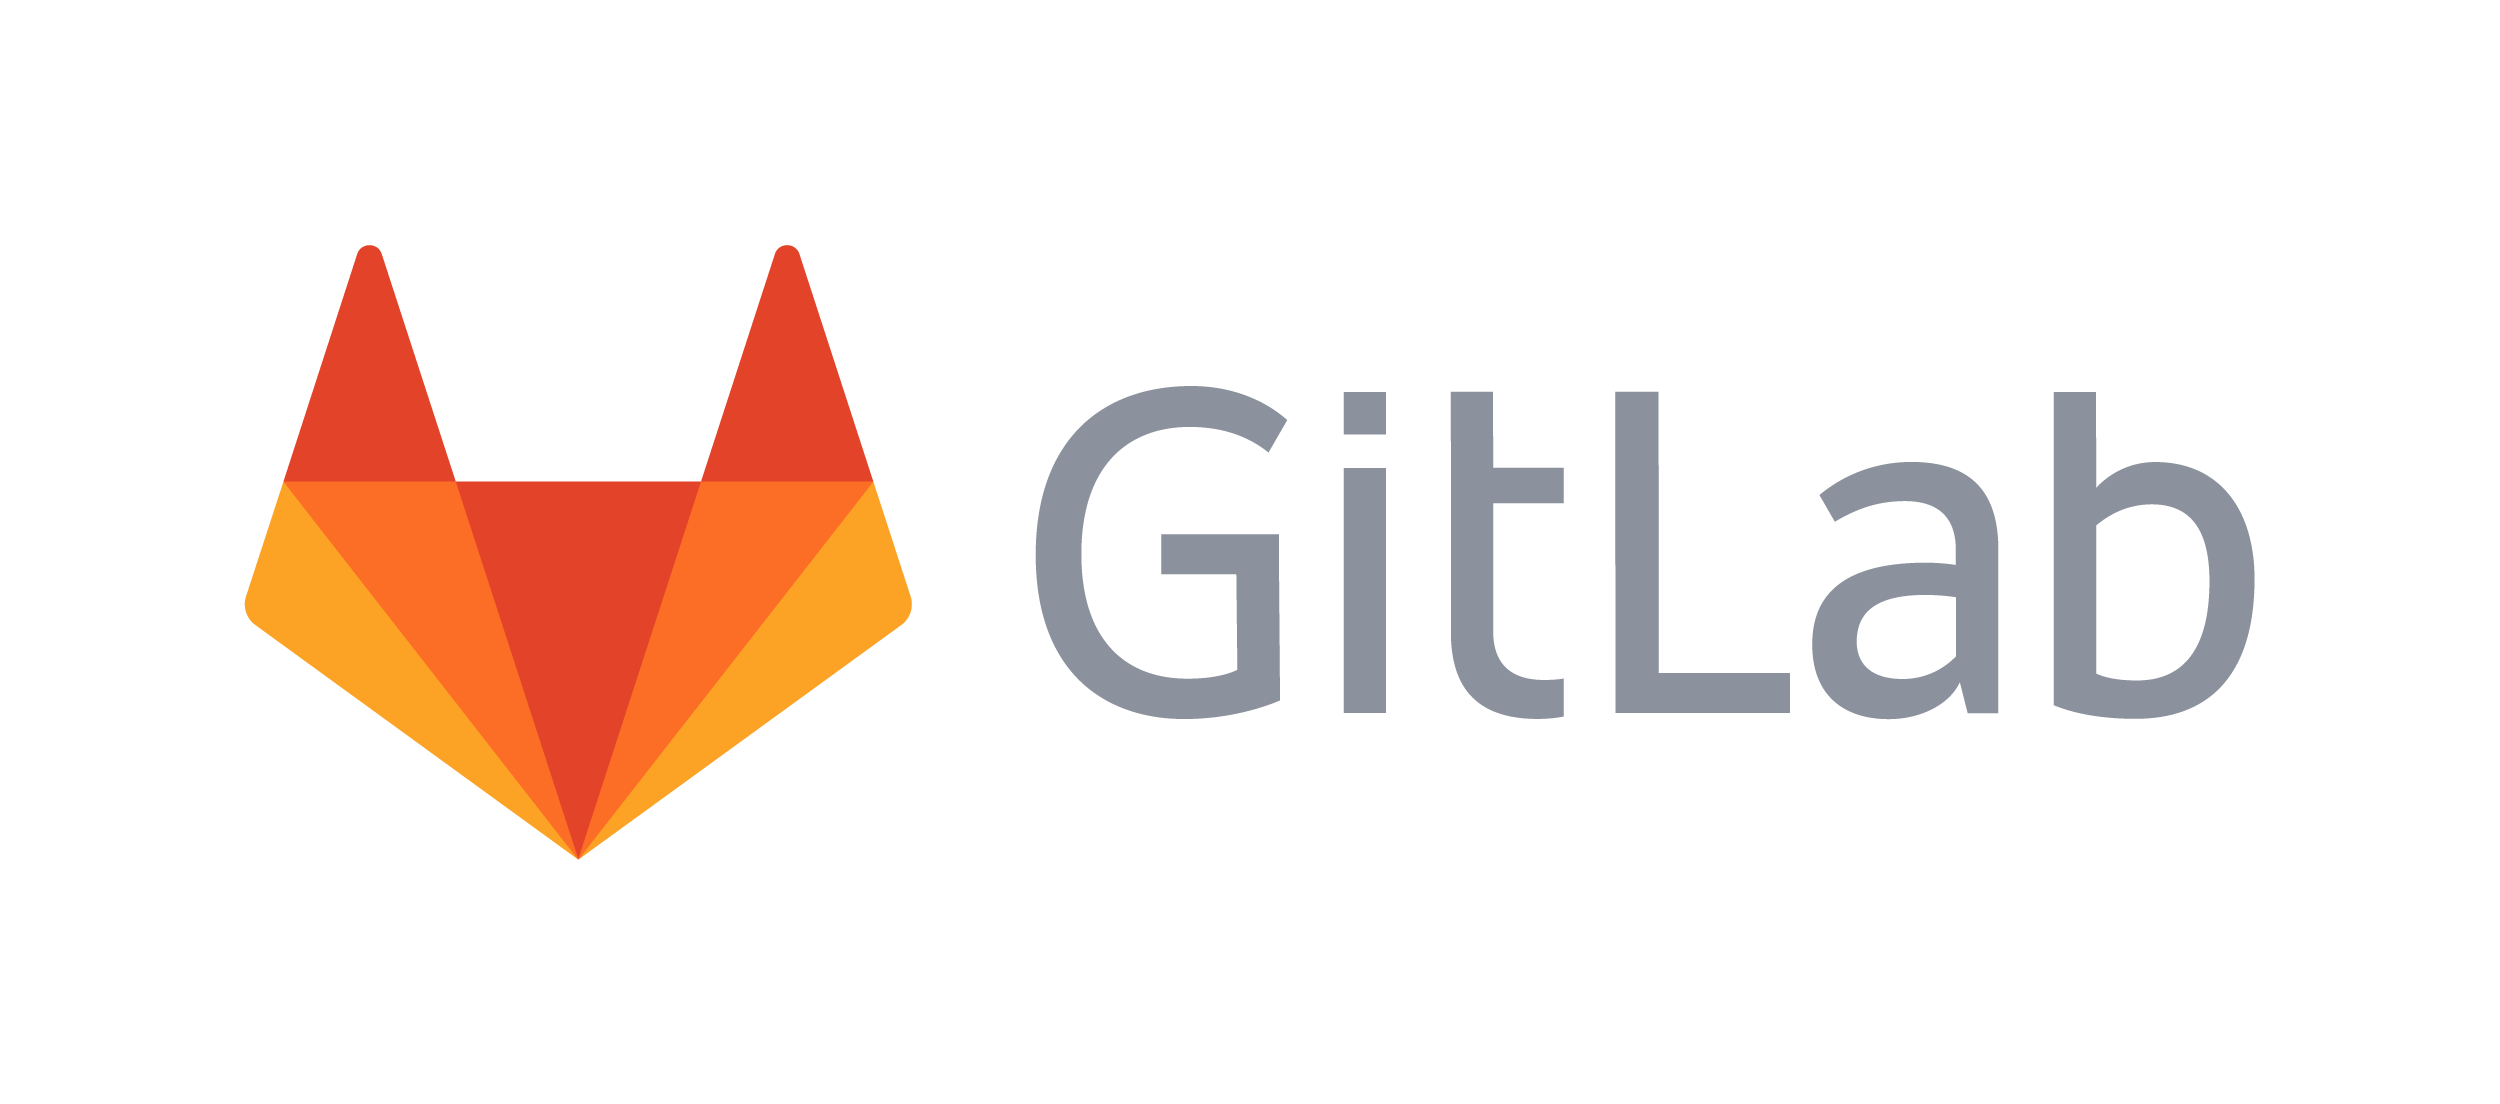 

Brand logo: triangular electric-blue font & symbol for "Git